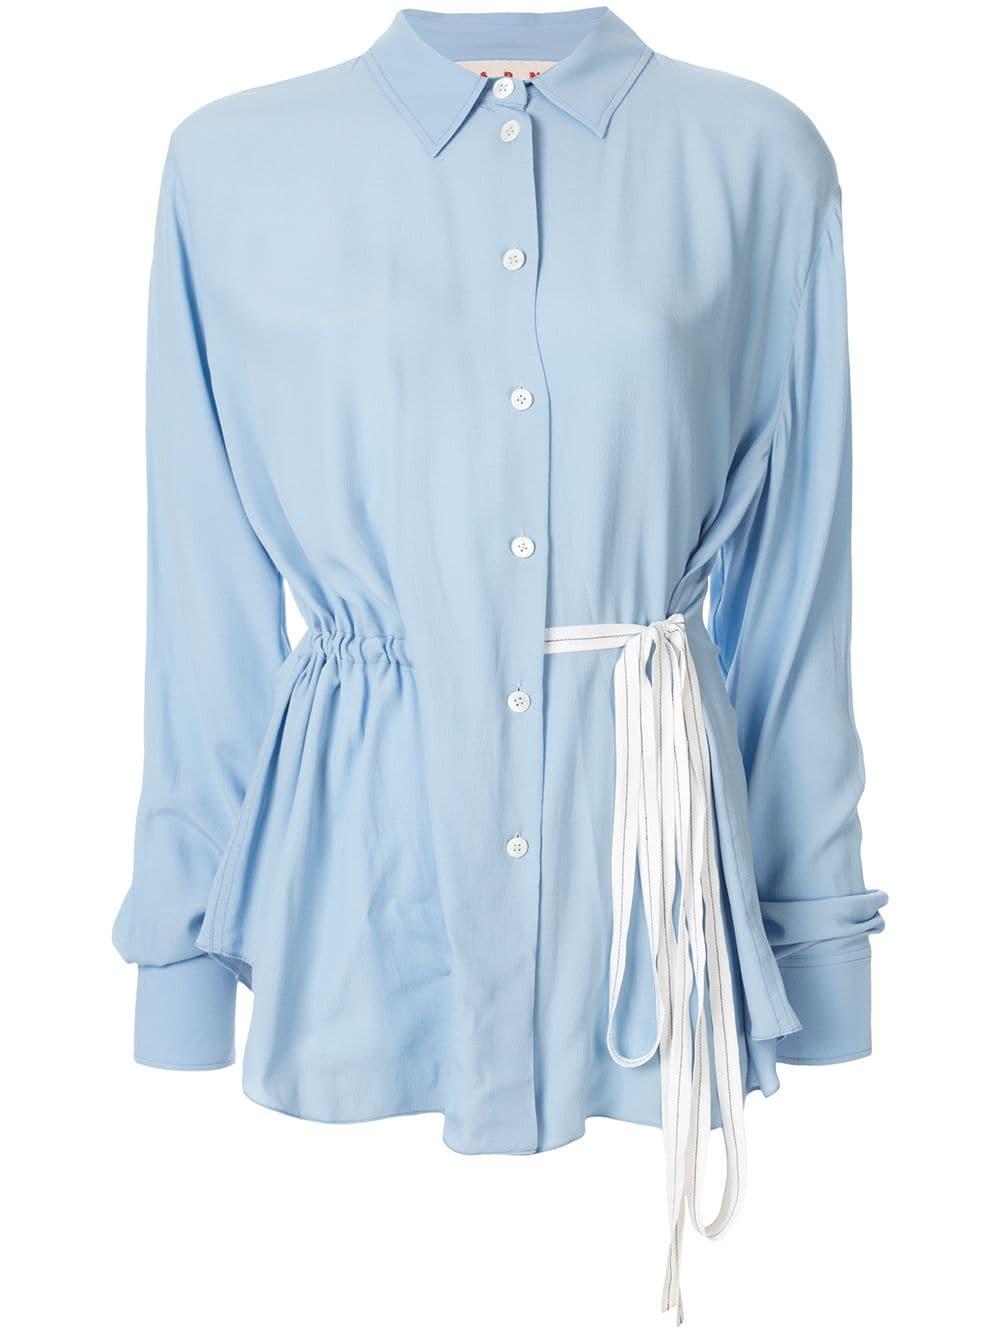 Marni Silk Drawstring Waist Shirt in Blue - Lyst